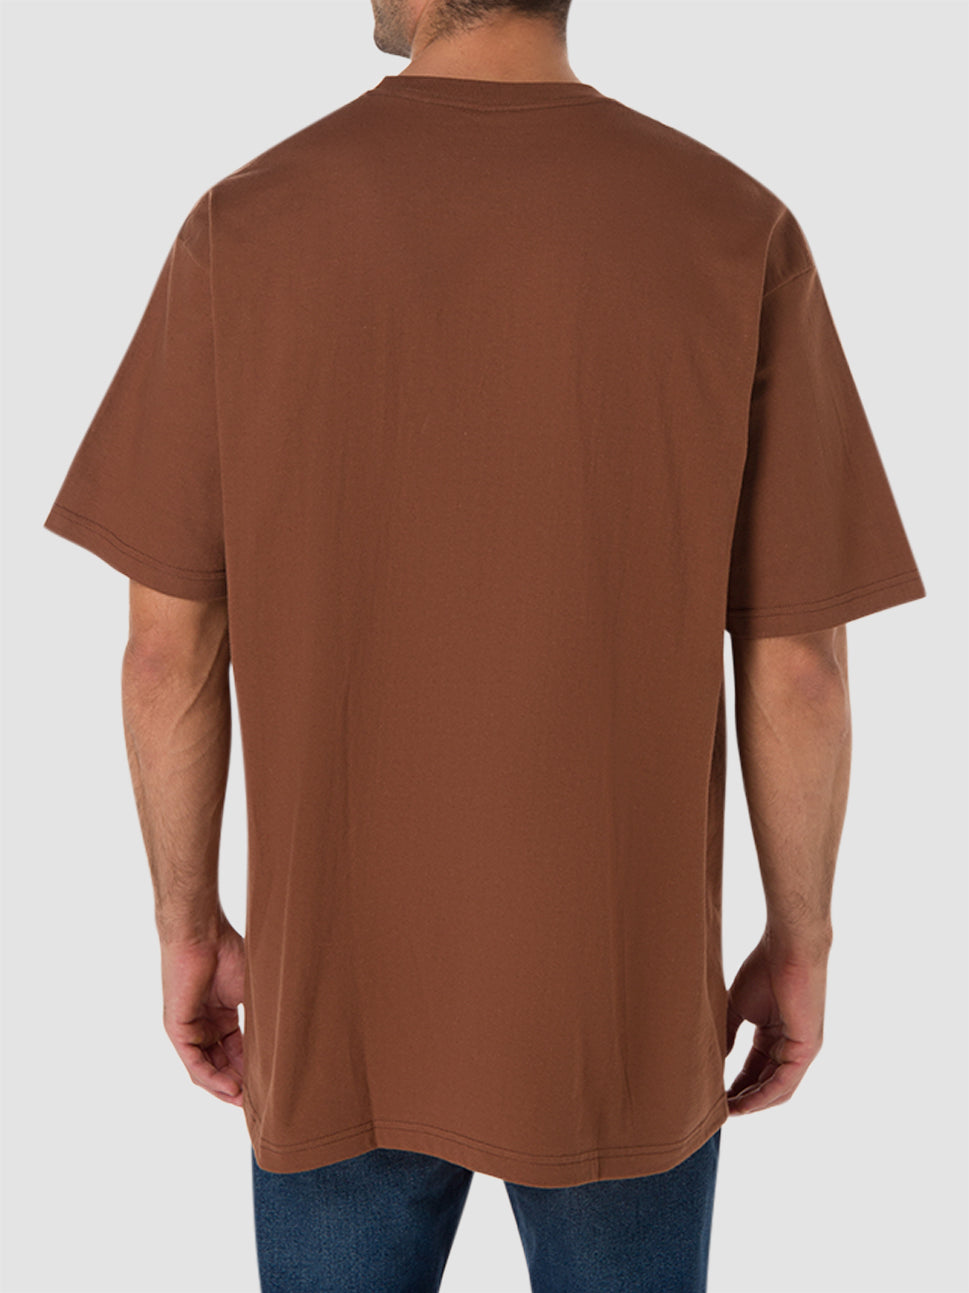 supreme brown t shirt 906602 90000001